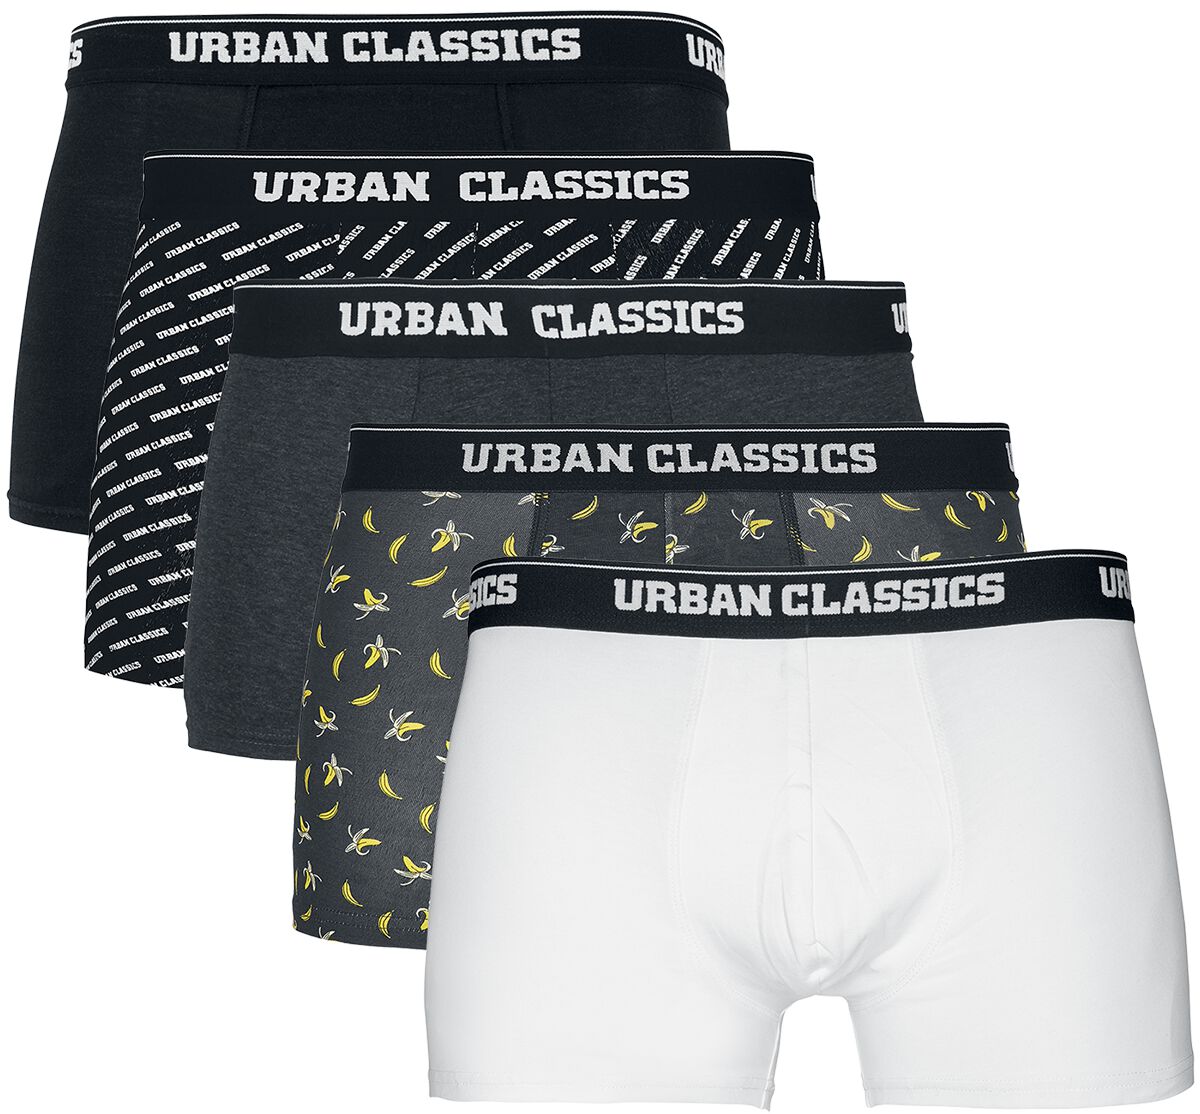 Urban Classics Boxer Shorts 5-Pack Boxershort-Set schwarz grau weiß in XL